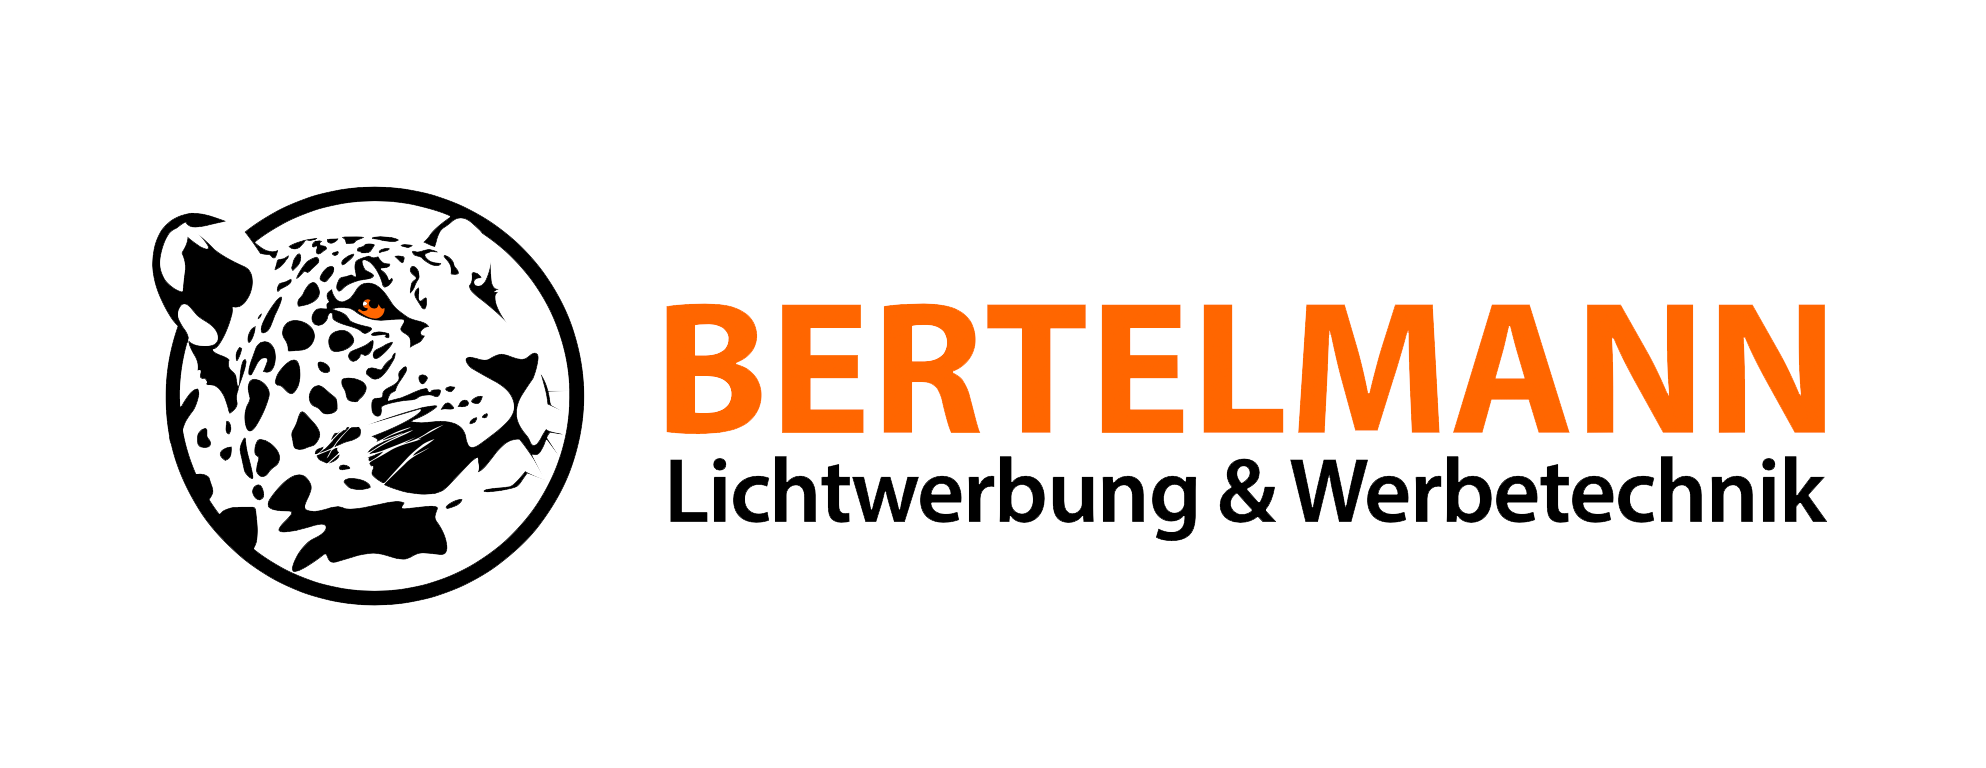 Bertelmann Werbetechnik Shop